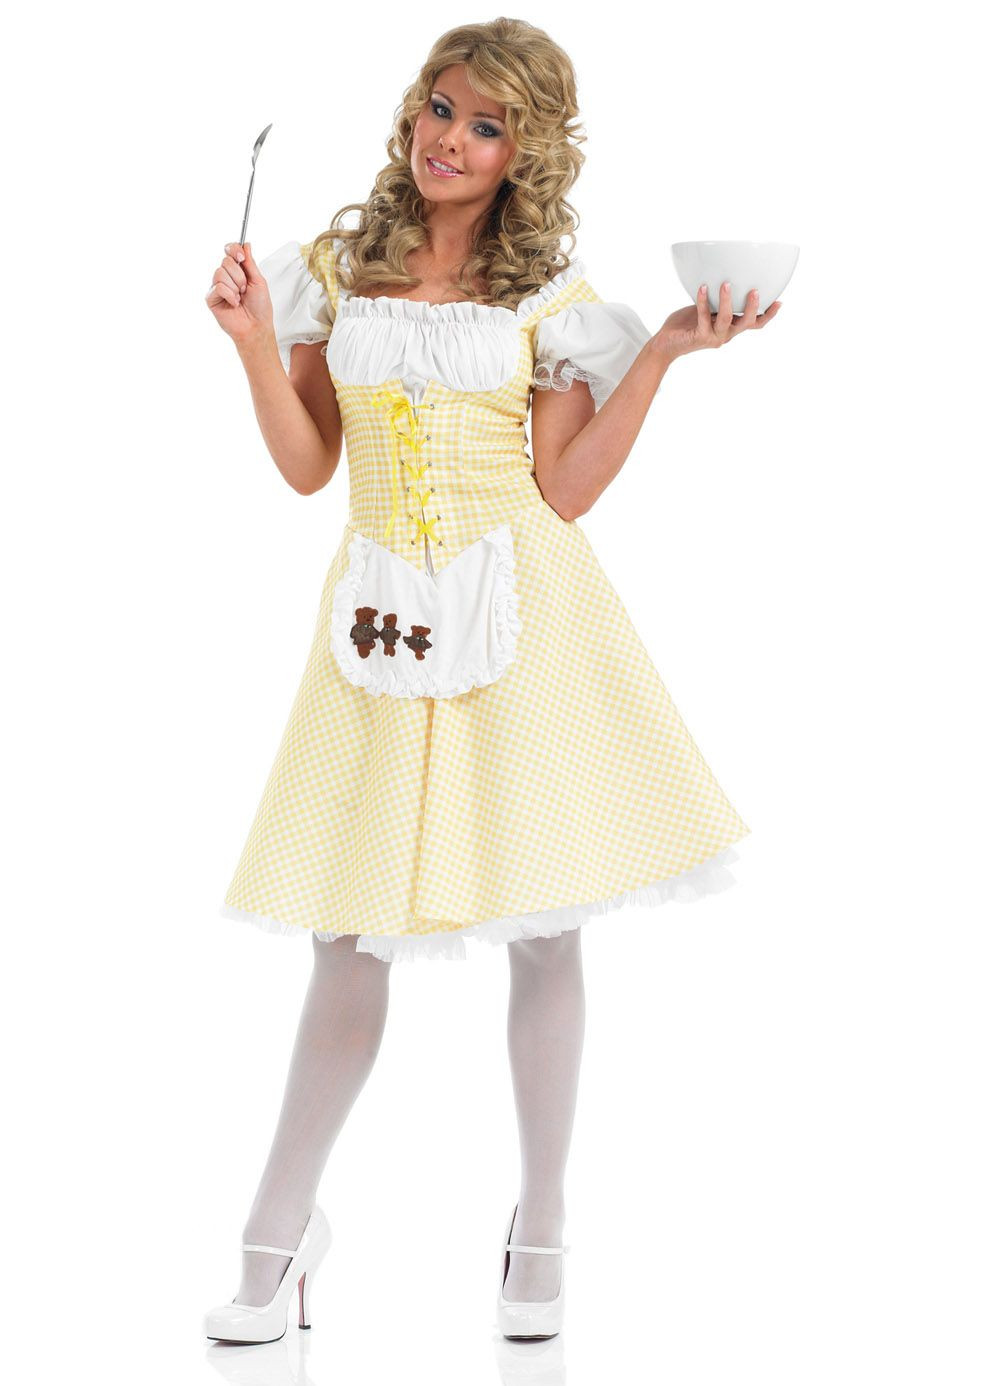 Best ideas about Goldilocks Costume DIY
. Save or Pin Longer Length Goldilocks Costume Adult Party Britain Now.